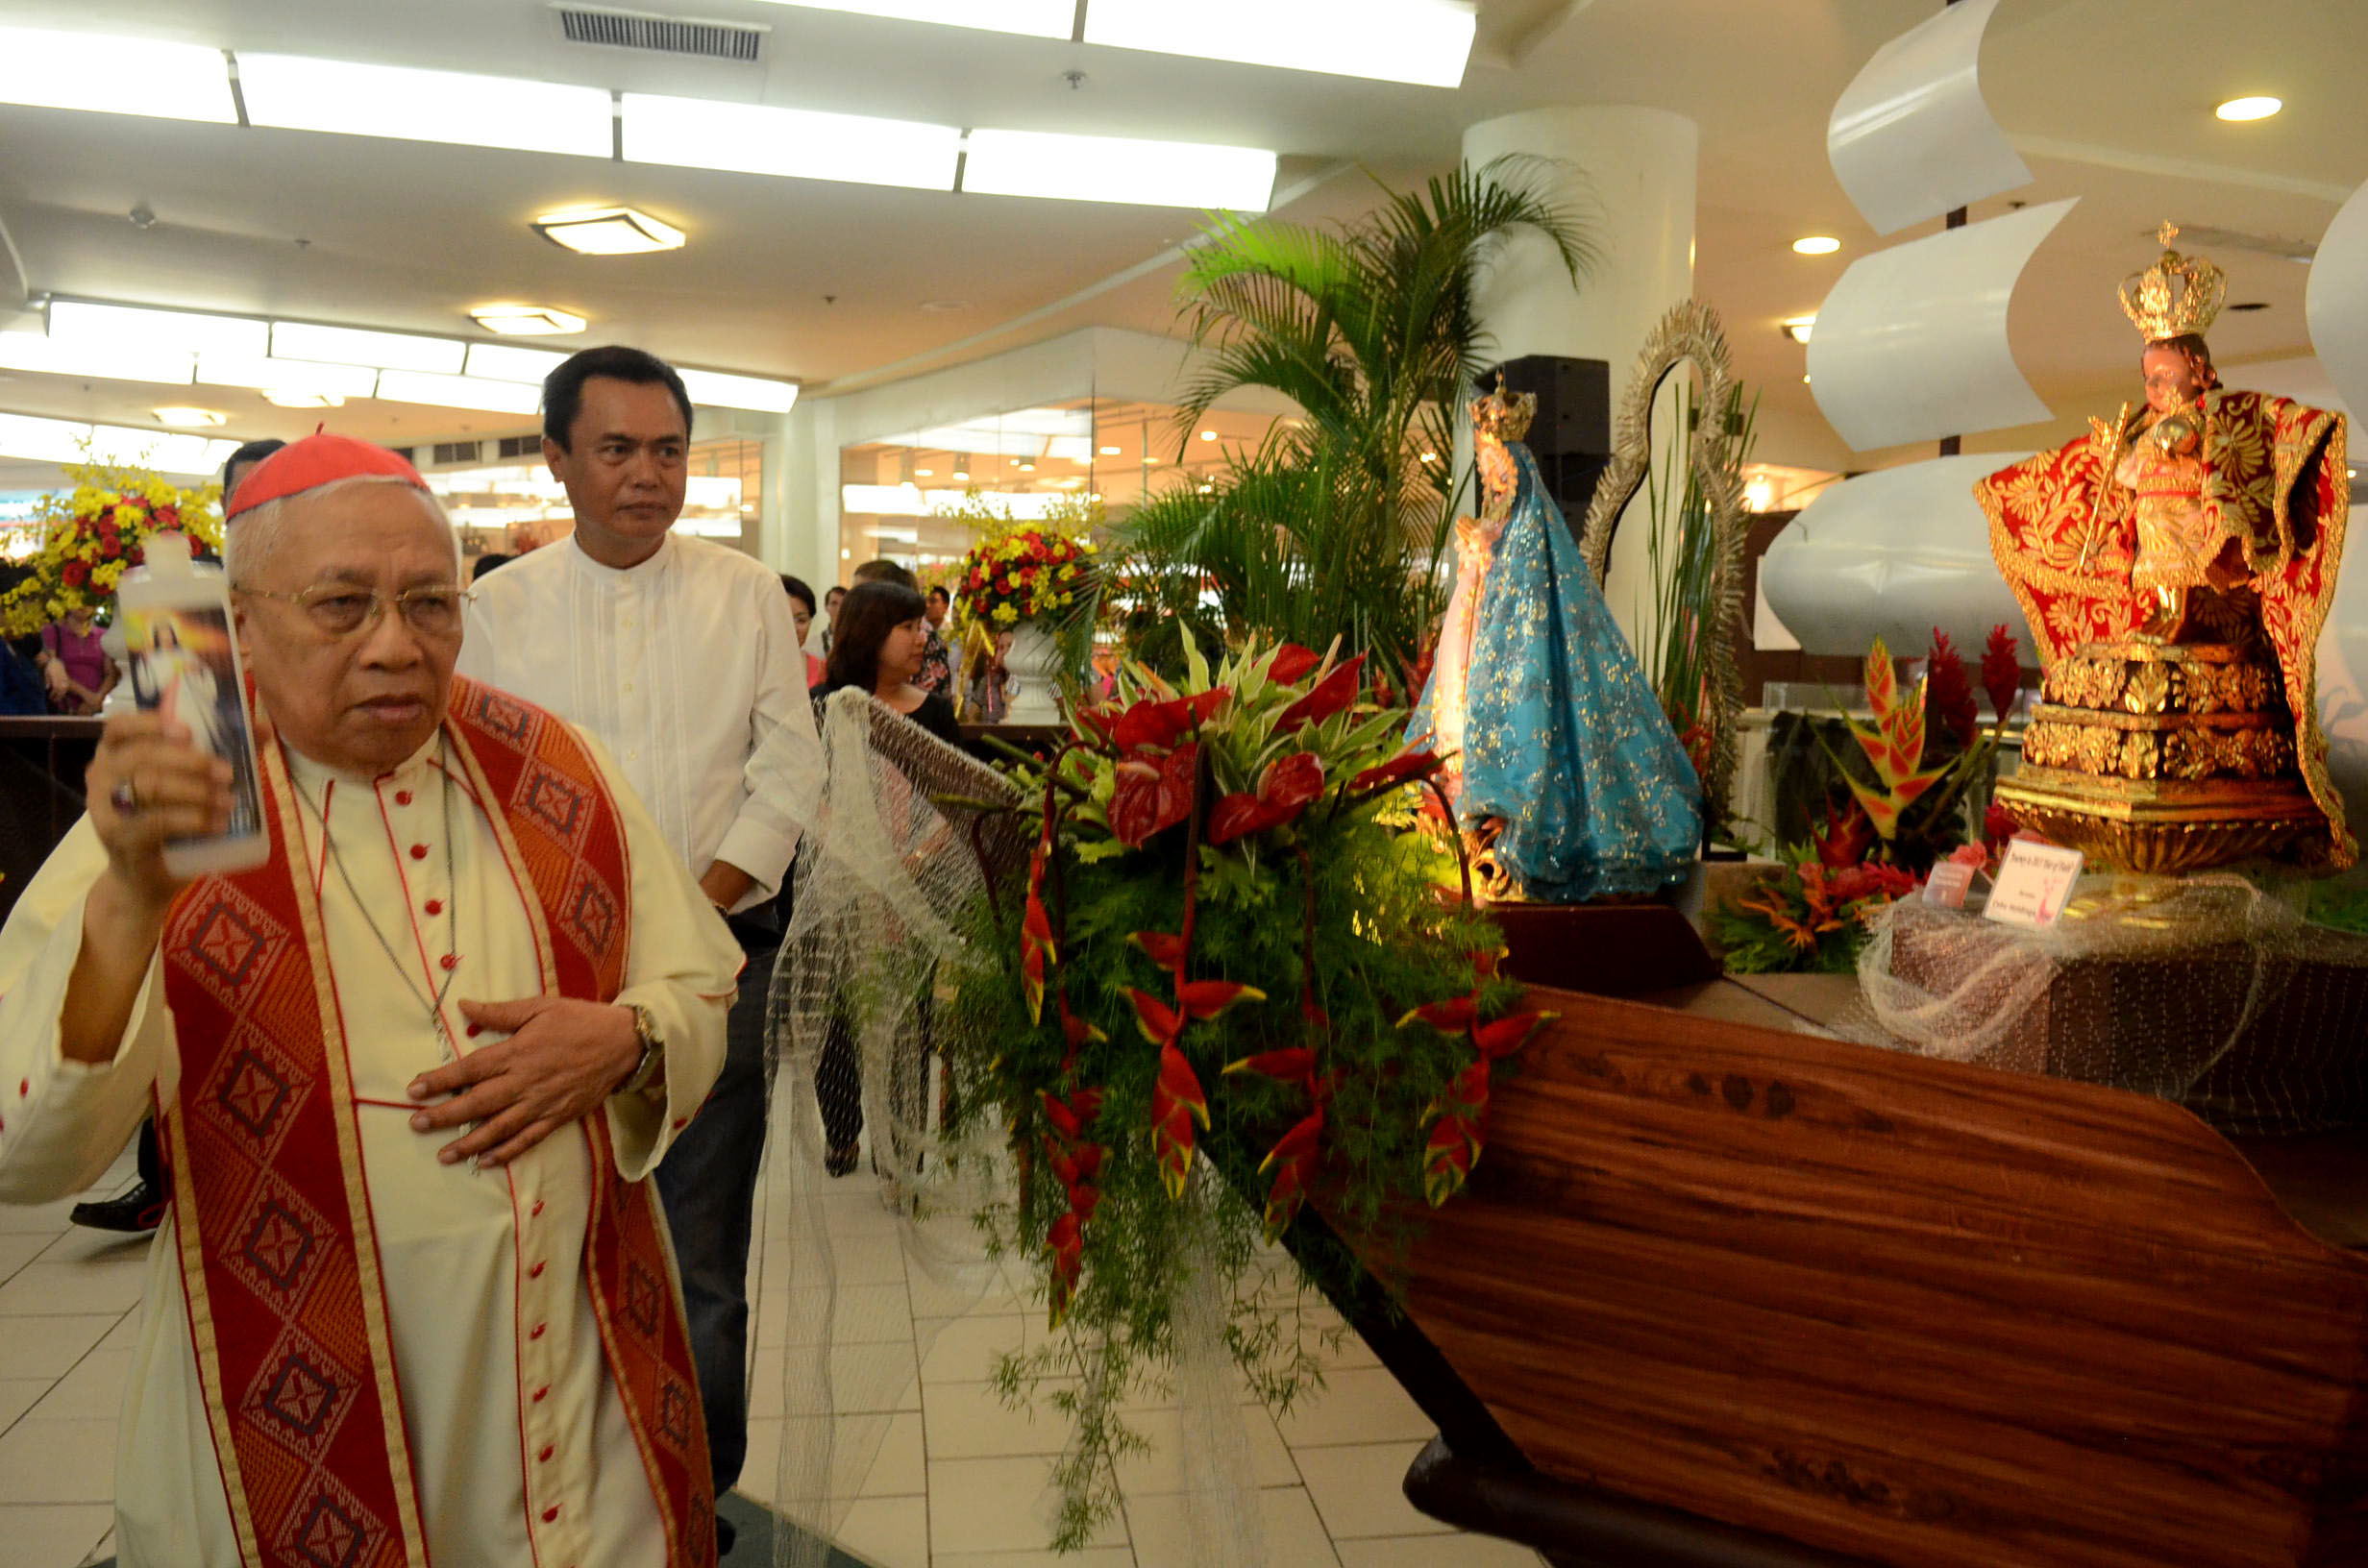 Cebu Archbishop Emeritus Ricardo Cardinal Vidal leads the opening and blessing of the Sto. Nino exhibit in Ayala Center Cebu. With him is Cebu Holdings president Francis Monera. (Sun.Star Photo/Ruel Rosello)